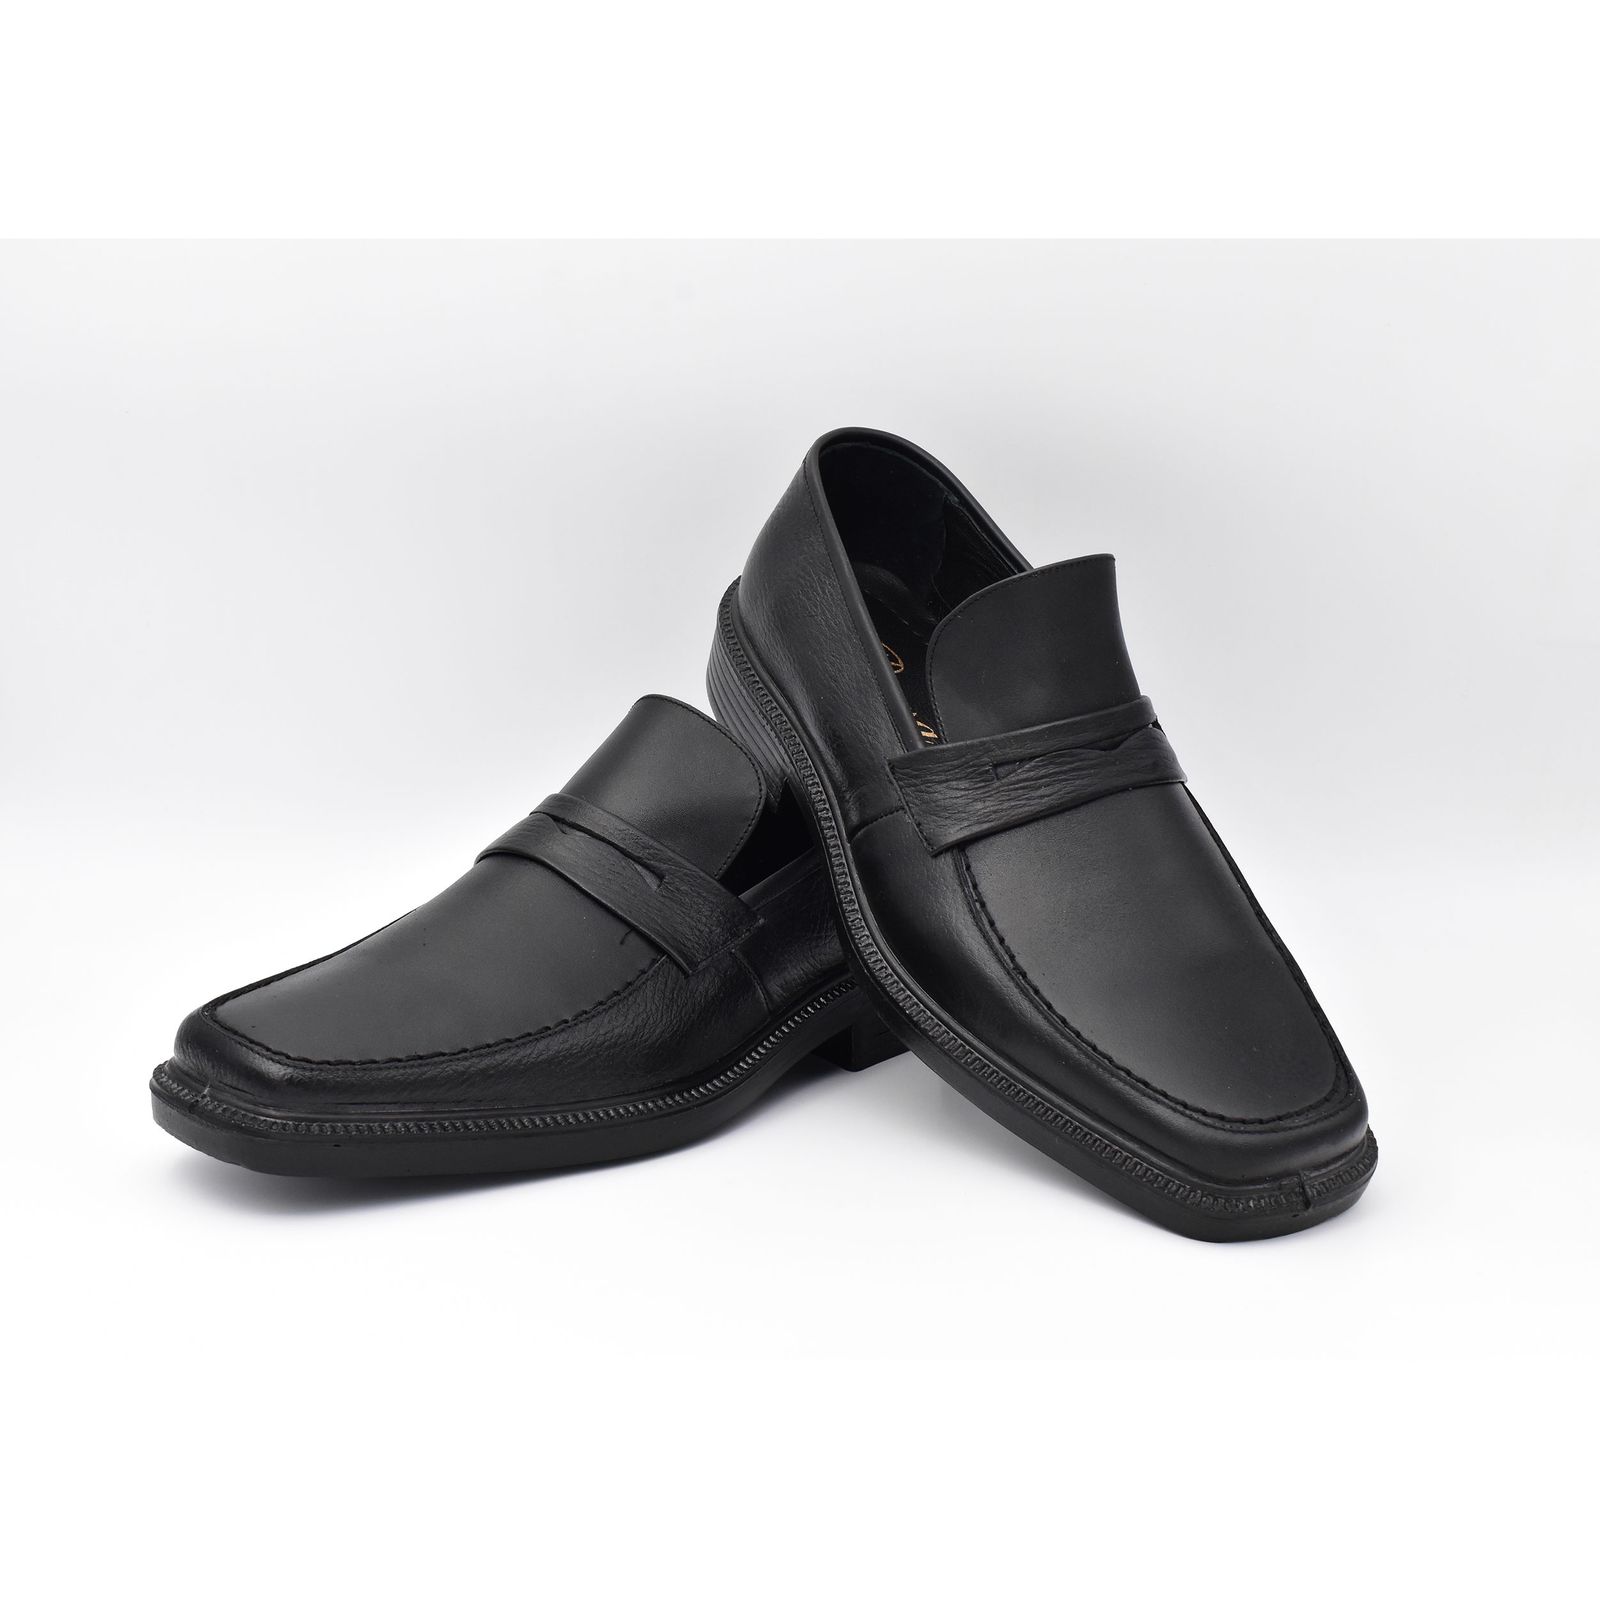 کفش مردانه پاما مدل Oscar کد G1189 -  - 7